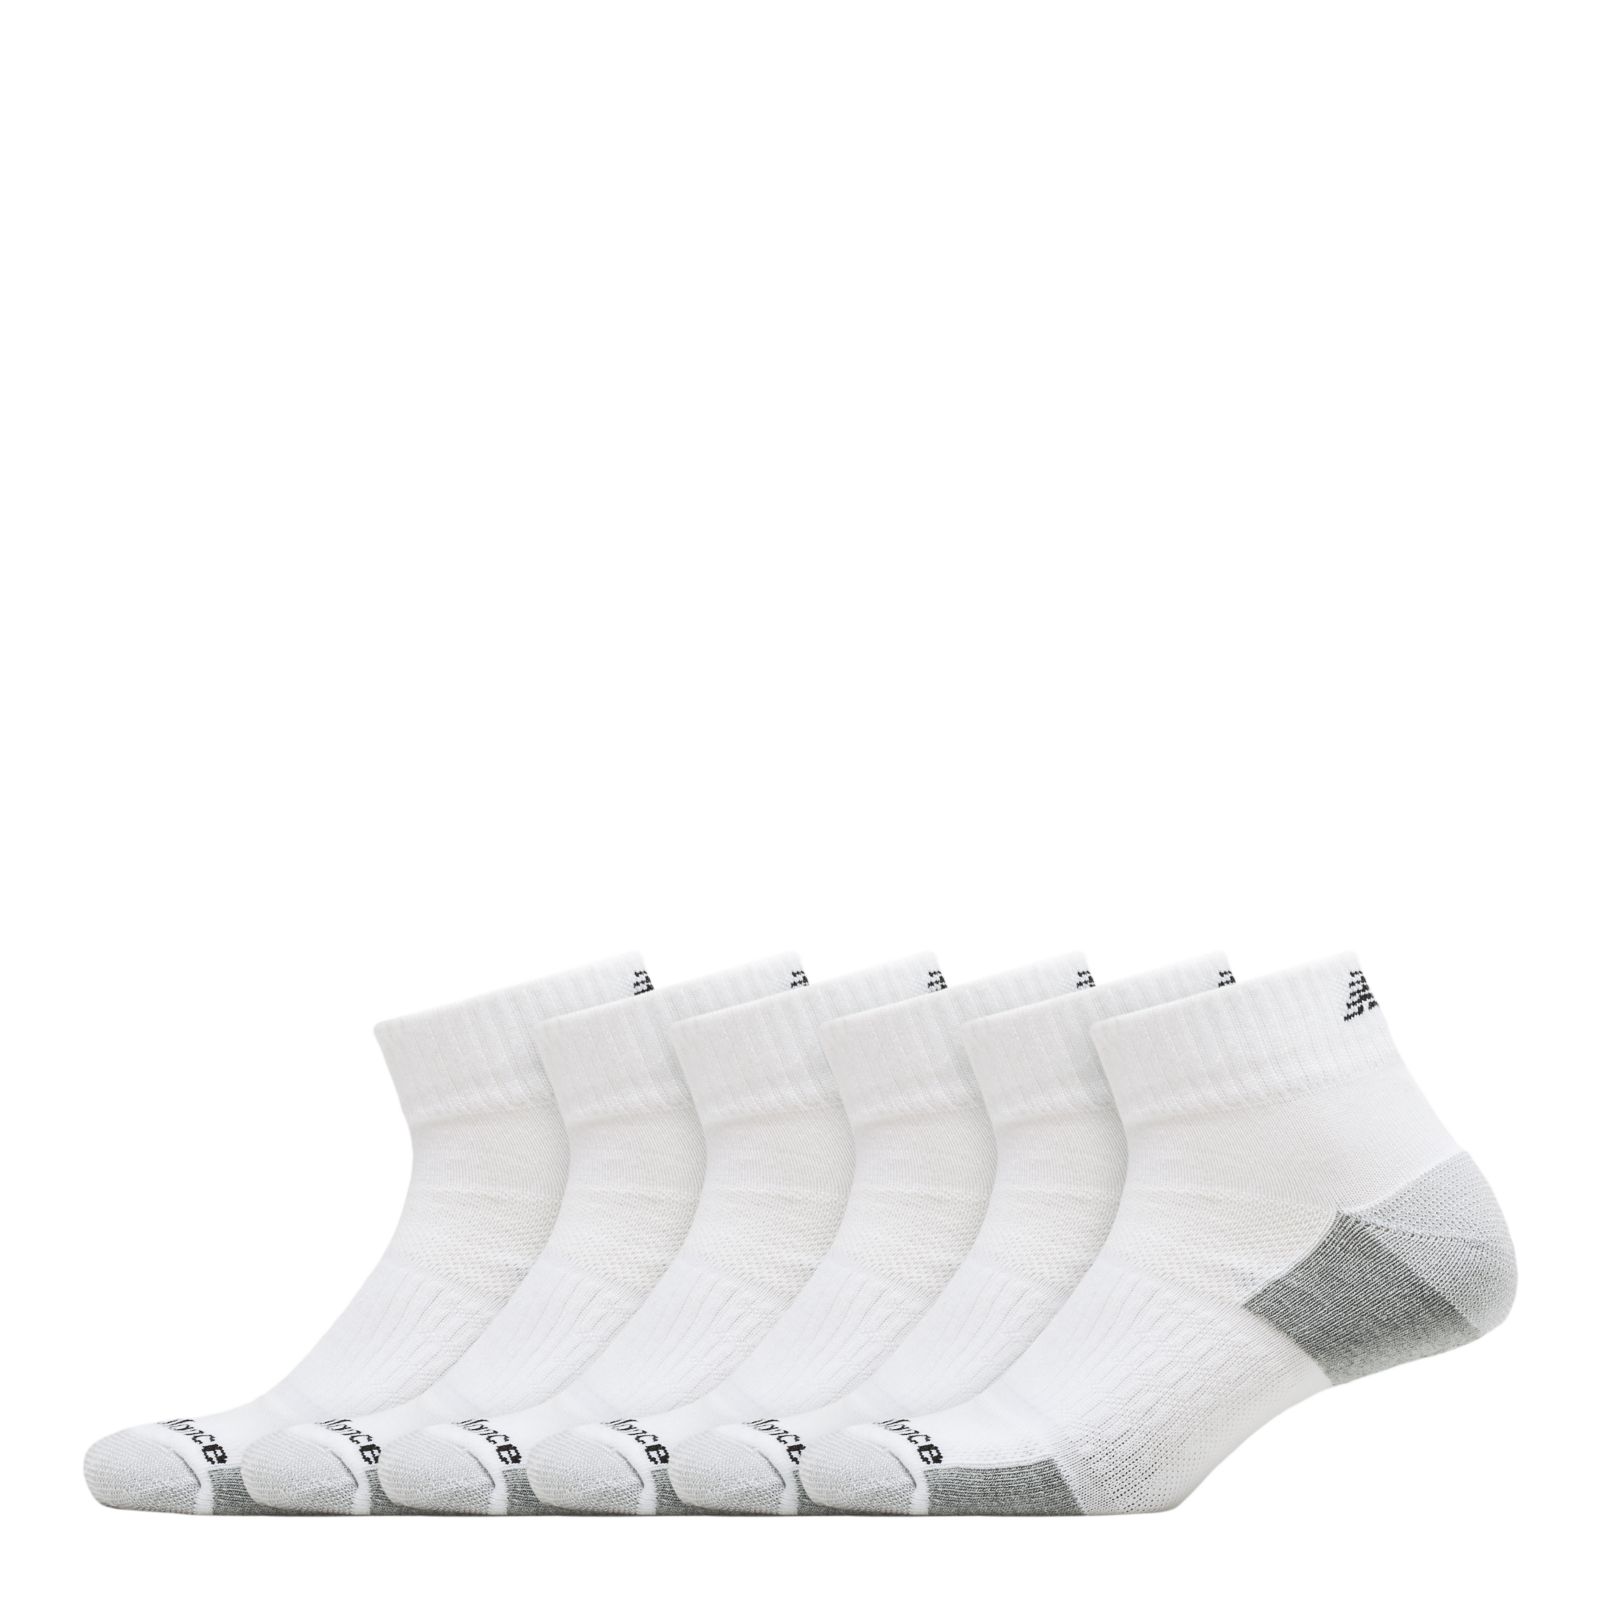 Cushioned Ankle Socks 6 Pack - New Balance